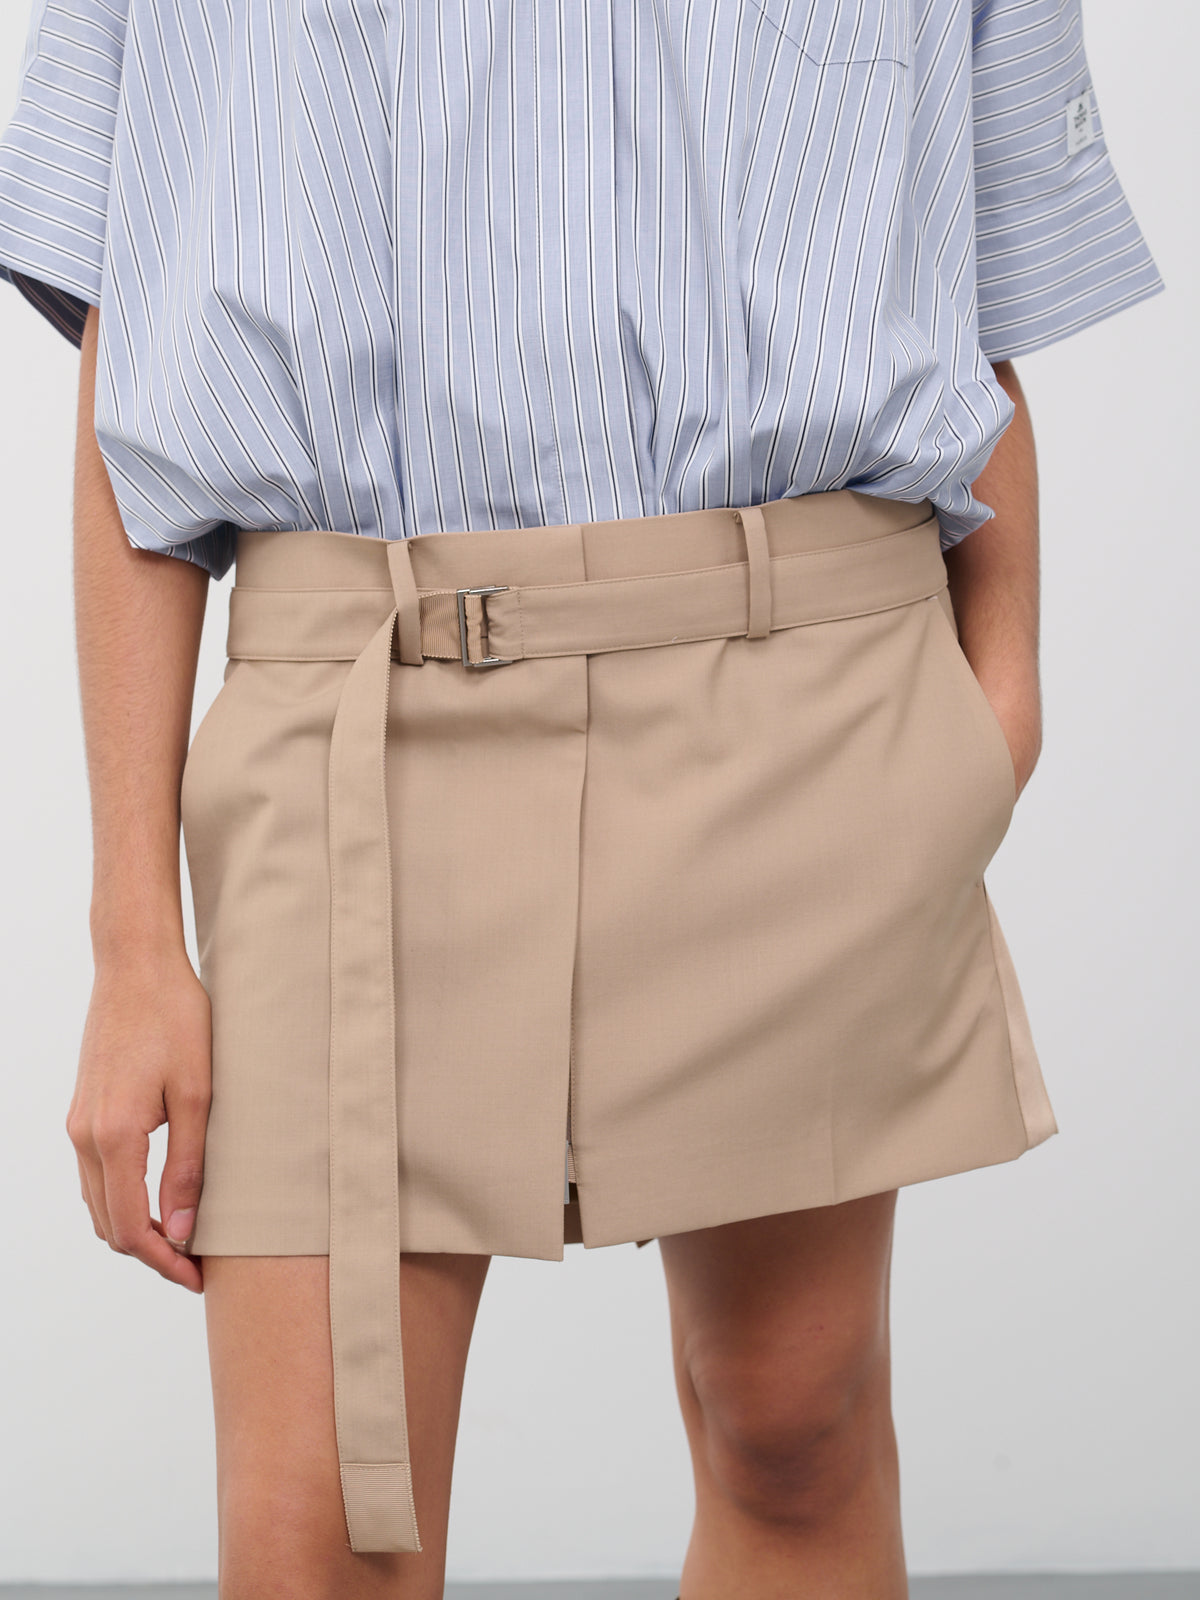 Shirt & Skirt Mini Dress (23-06525-458-LIGHT-BLUE-STRIPE)